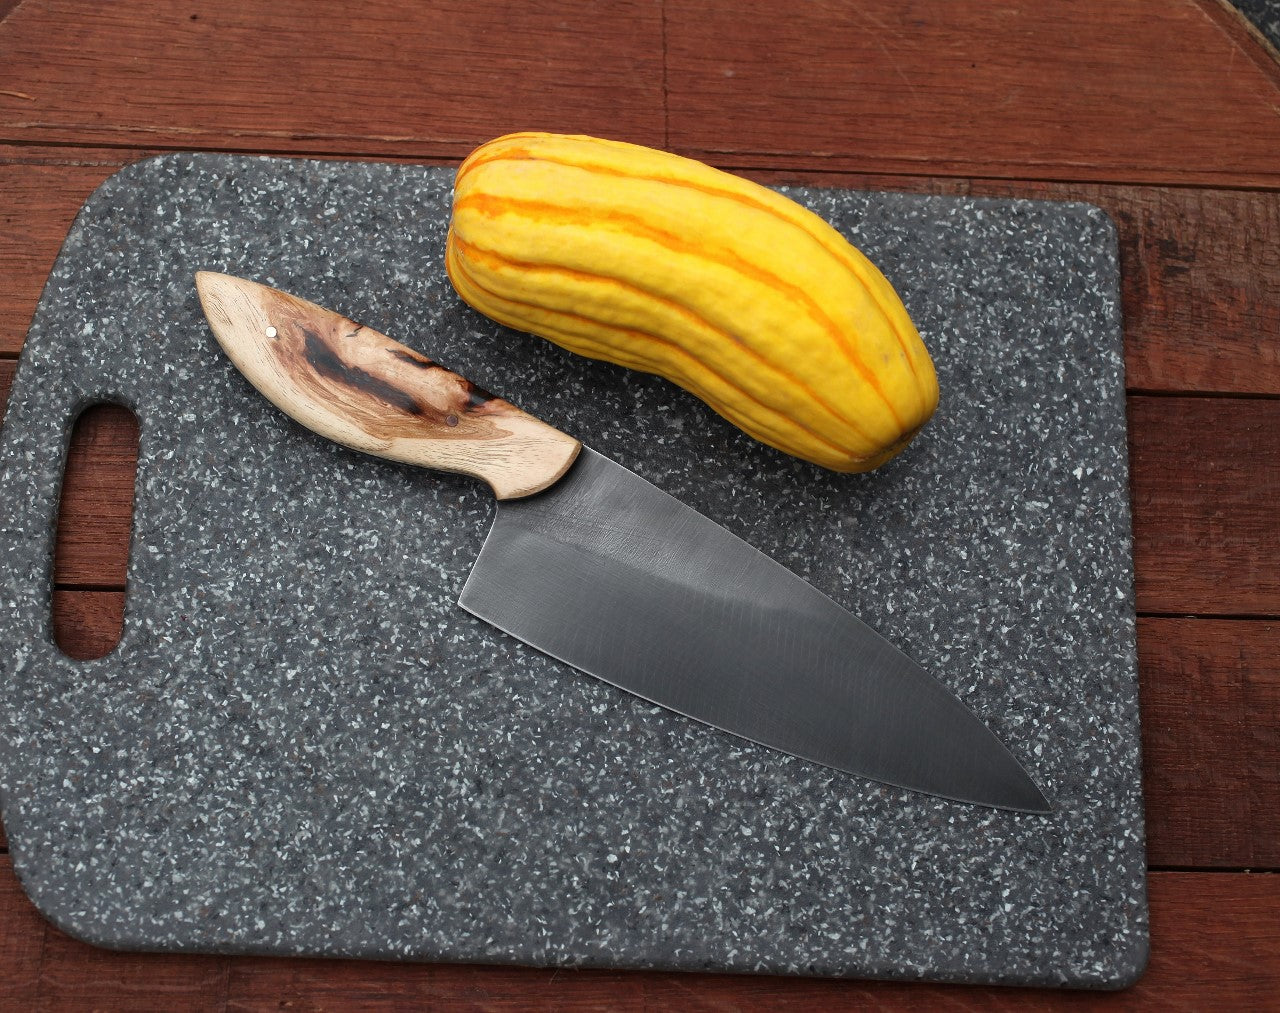 7.5 inch Chef knife, knotty hickory